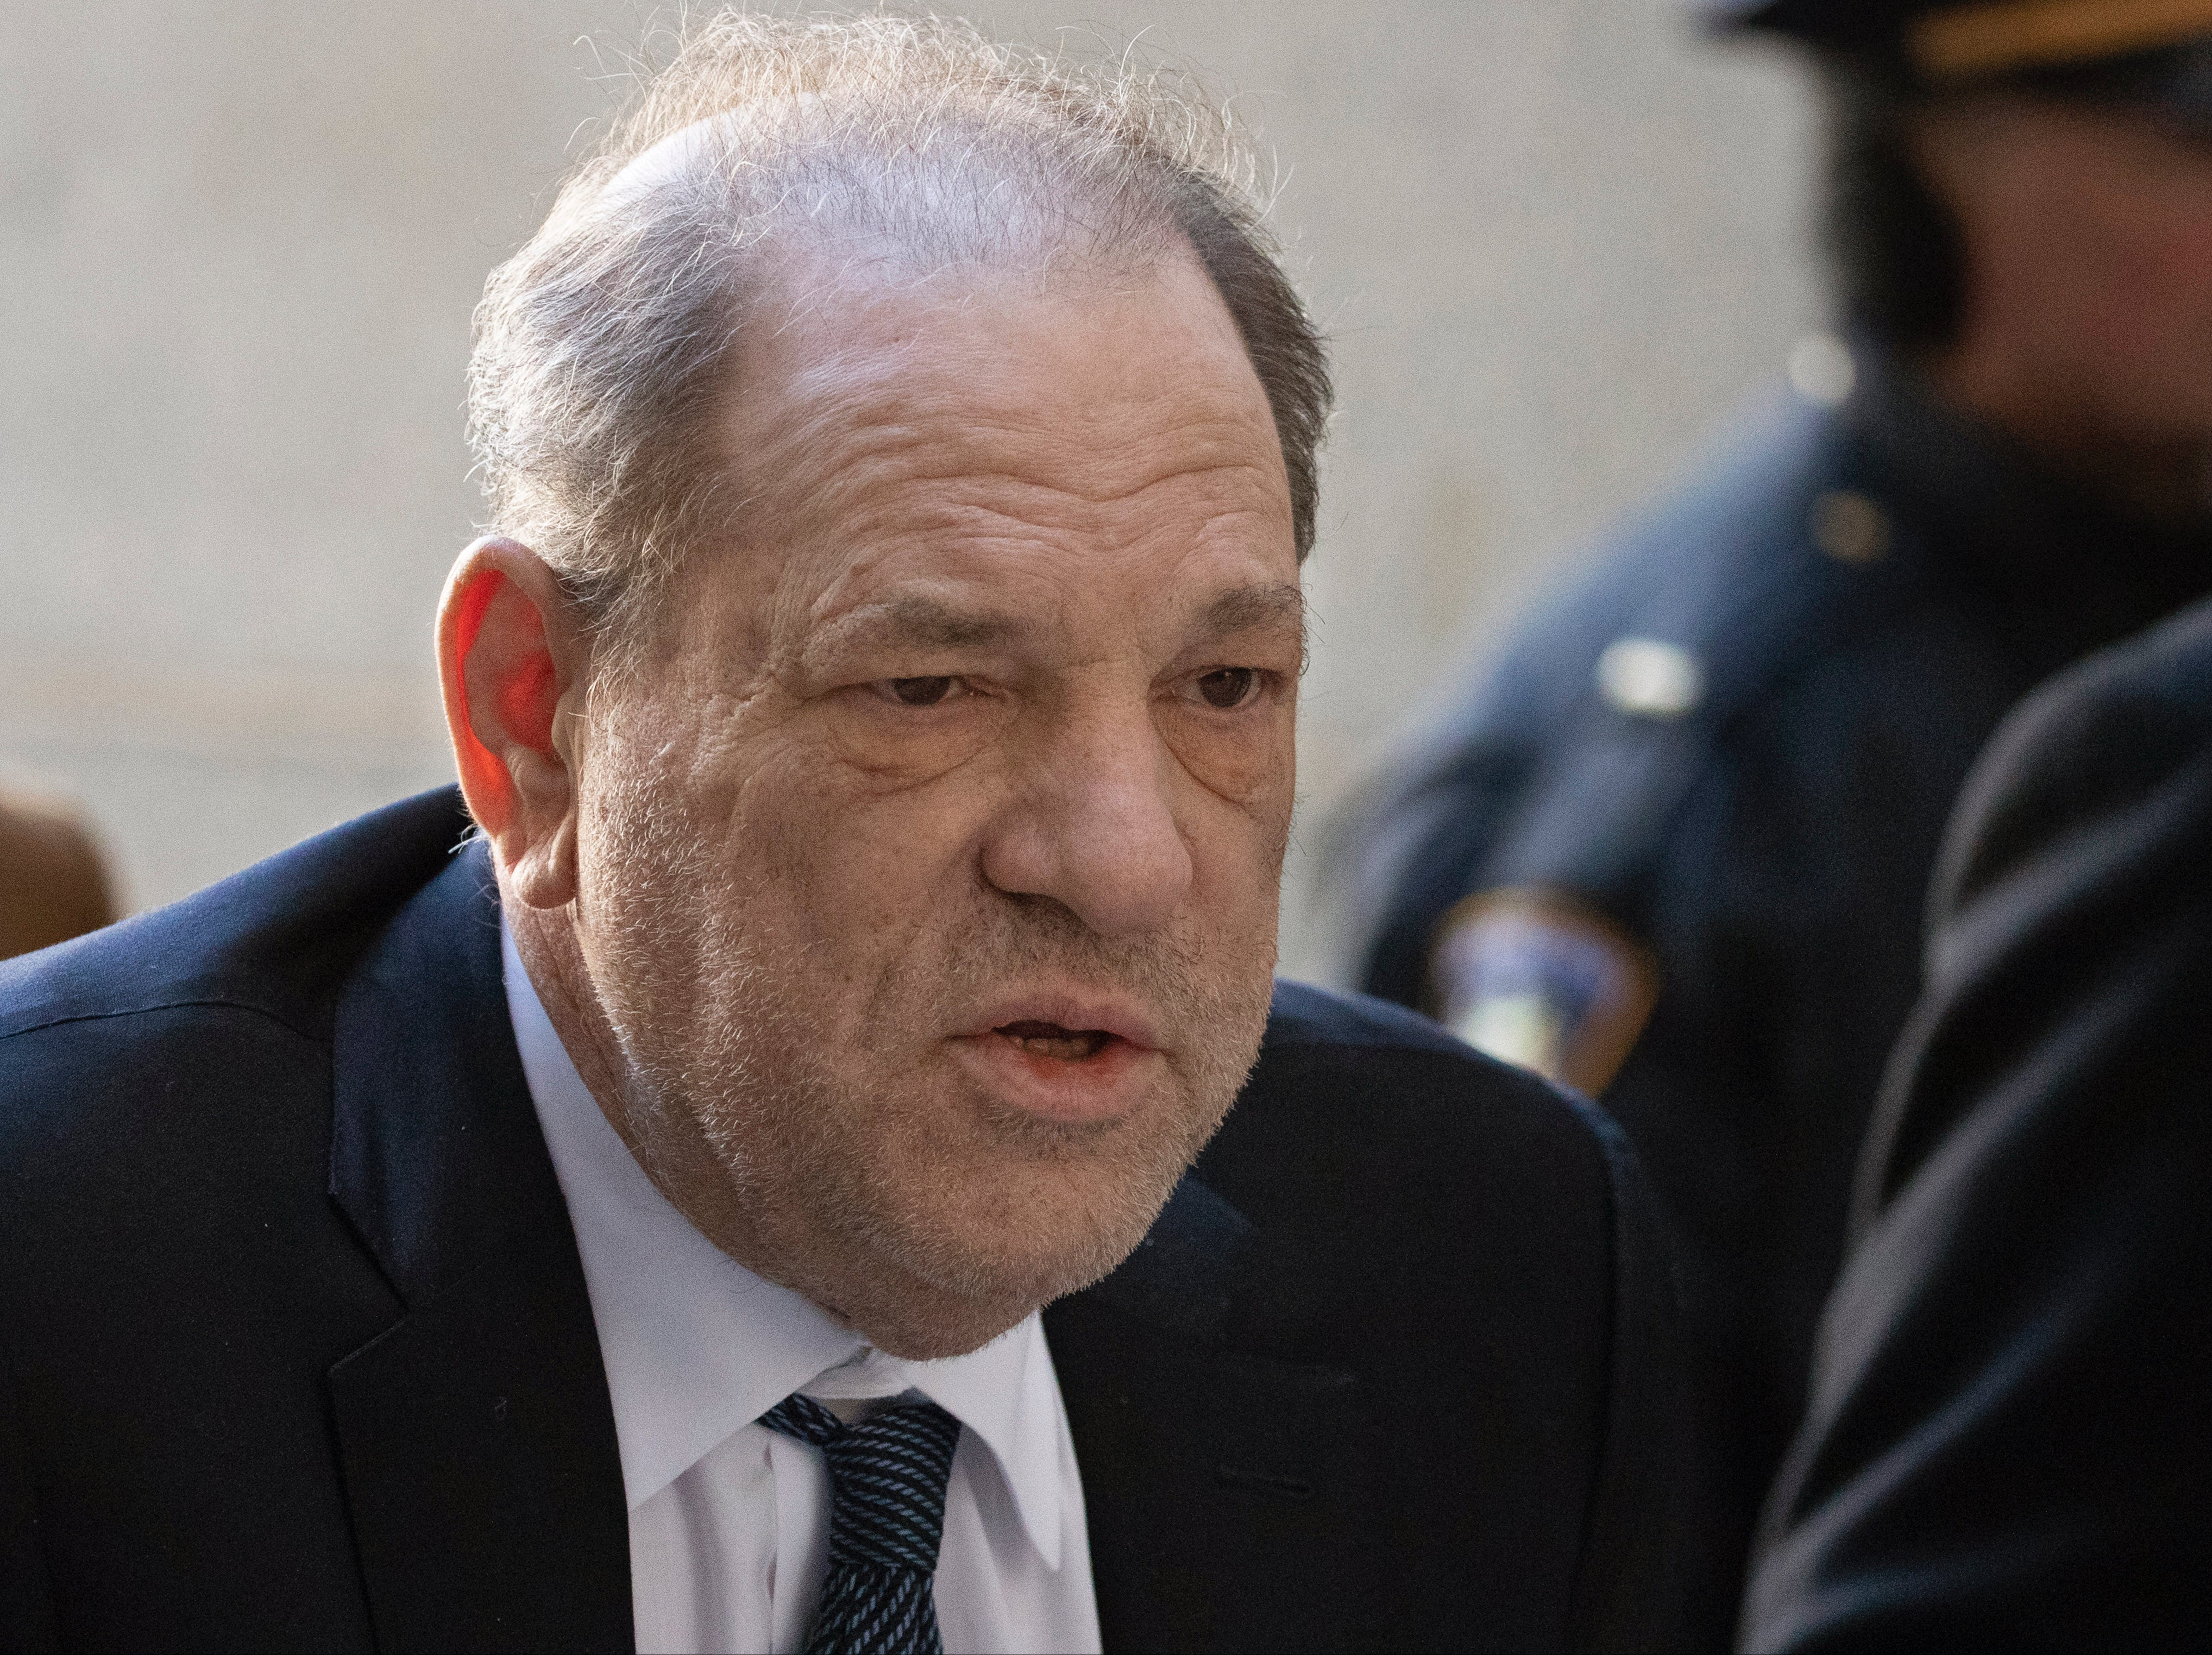 Harvey Weinstein arrives at a Manhattan court in New York on 21 February